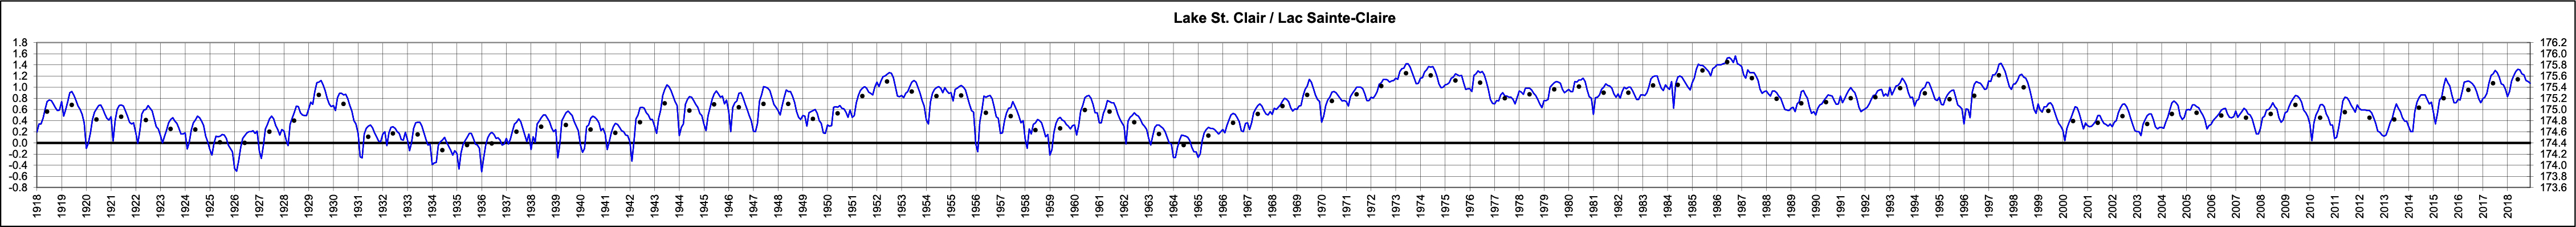 Lake St. Clair